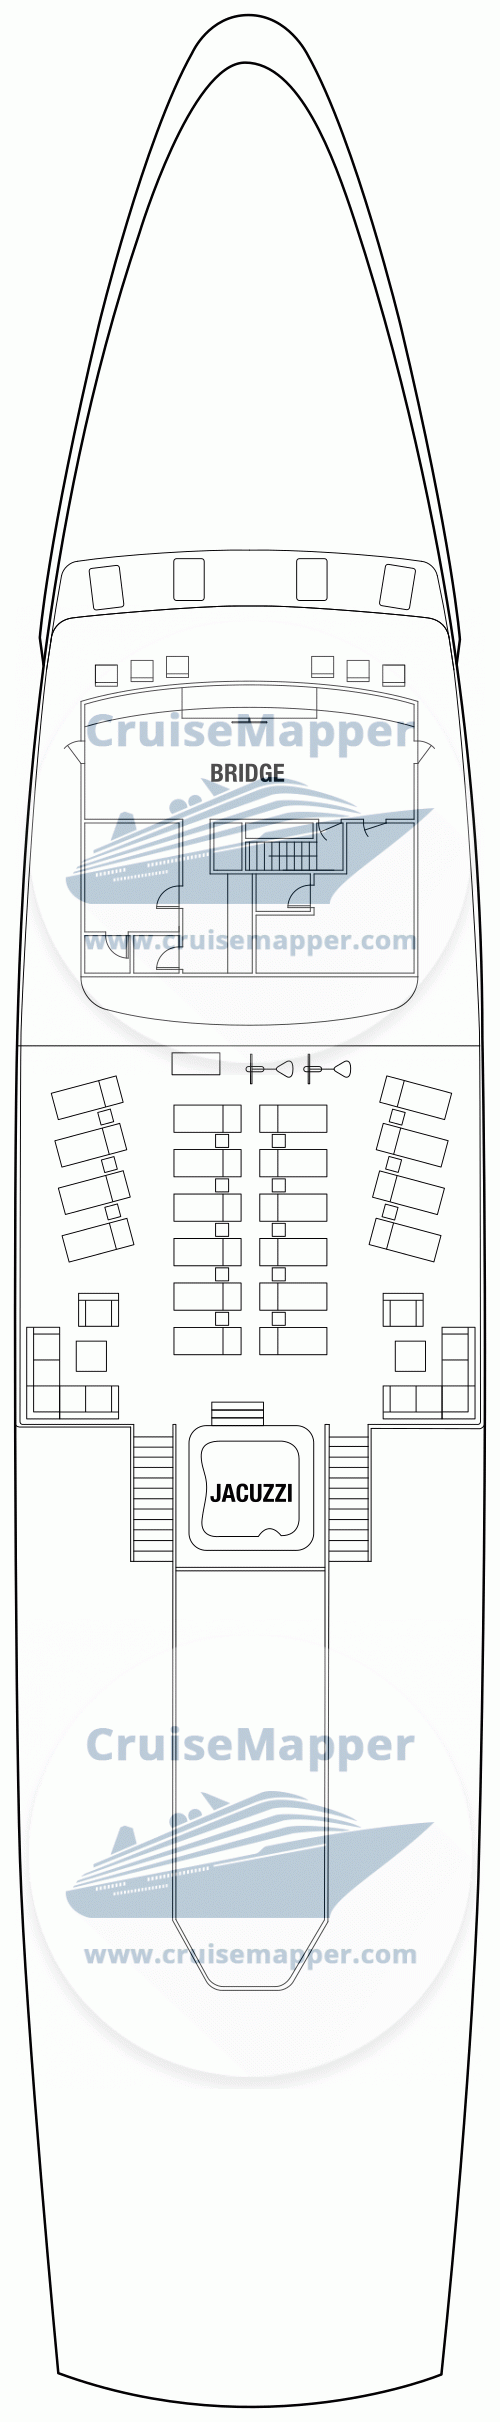 Elixir Elysium yacht Deck 05 - Sundeck-Pool-Bridge